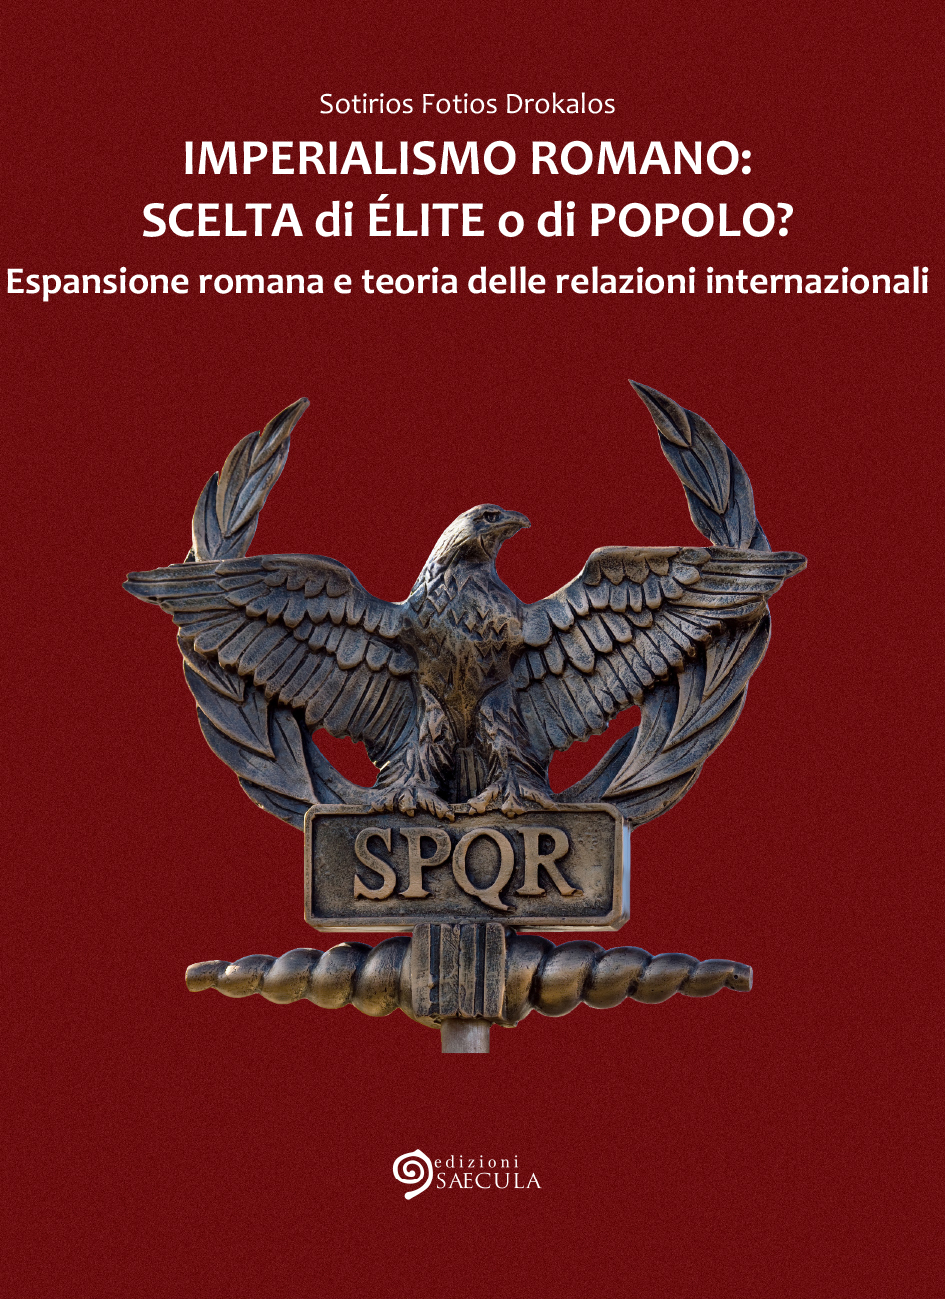 Imperialismo romano: scelta di élite o di popolo? di Sotirios Fotios Drokalos